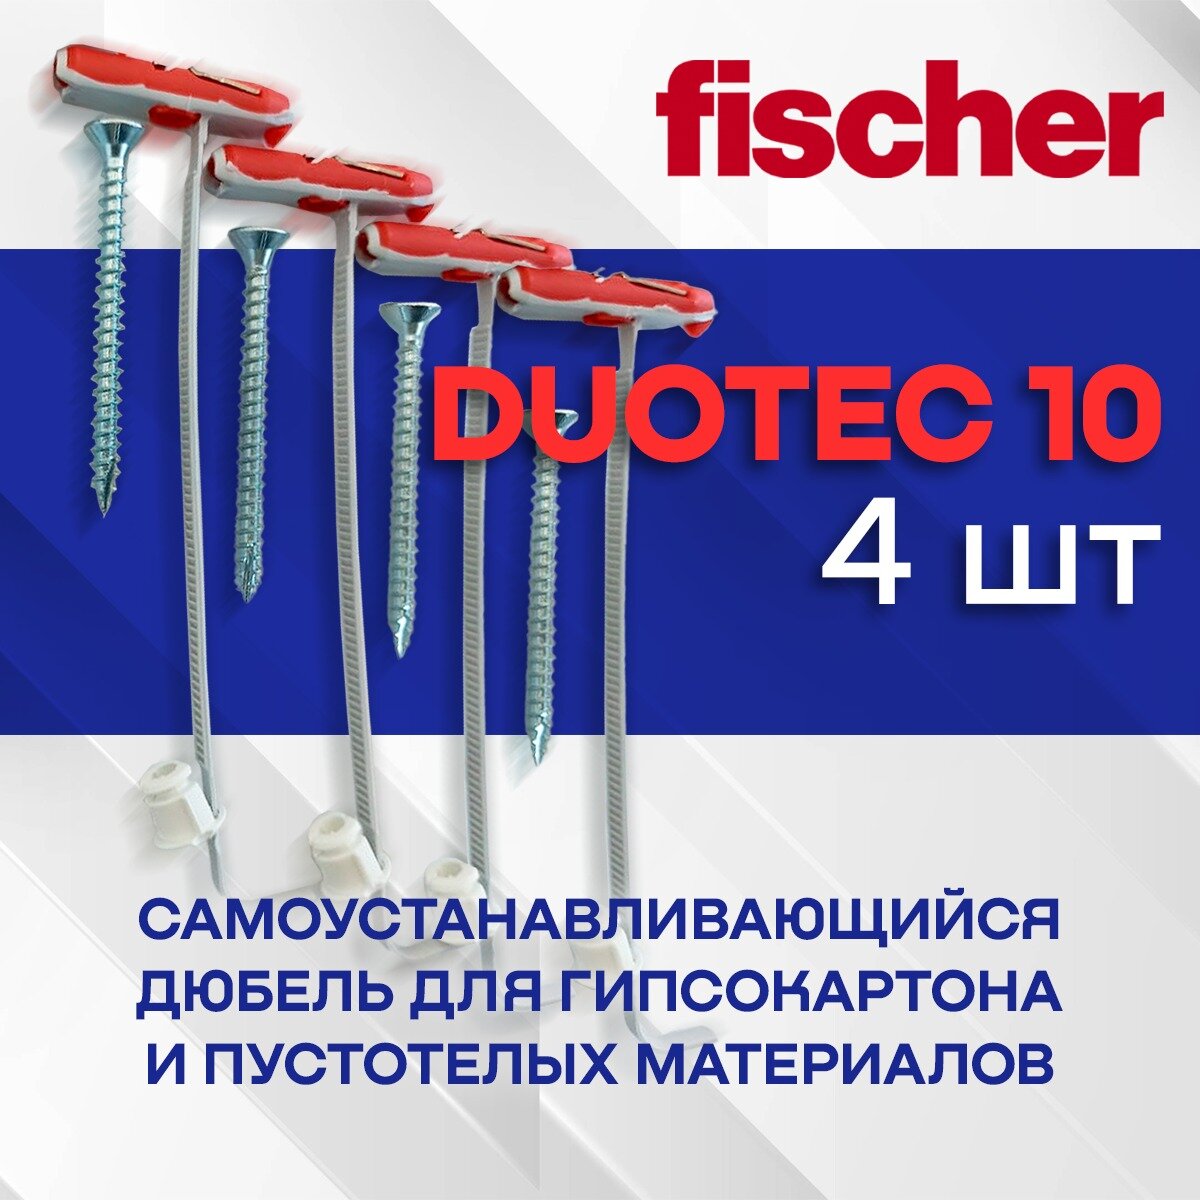 Дюбель Fischer DUOTEC 10 в комплекте с шурупом и шайбой -4 шт.